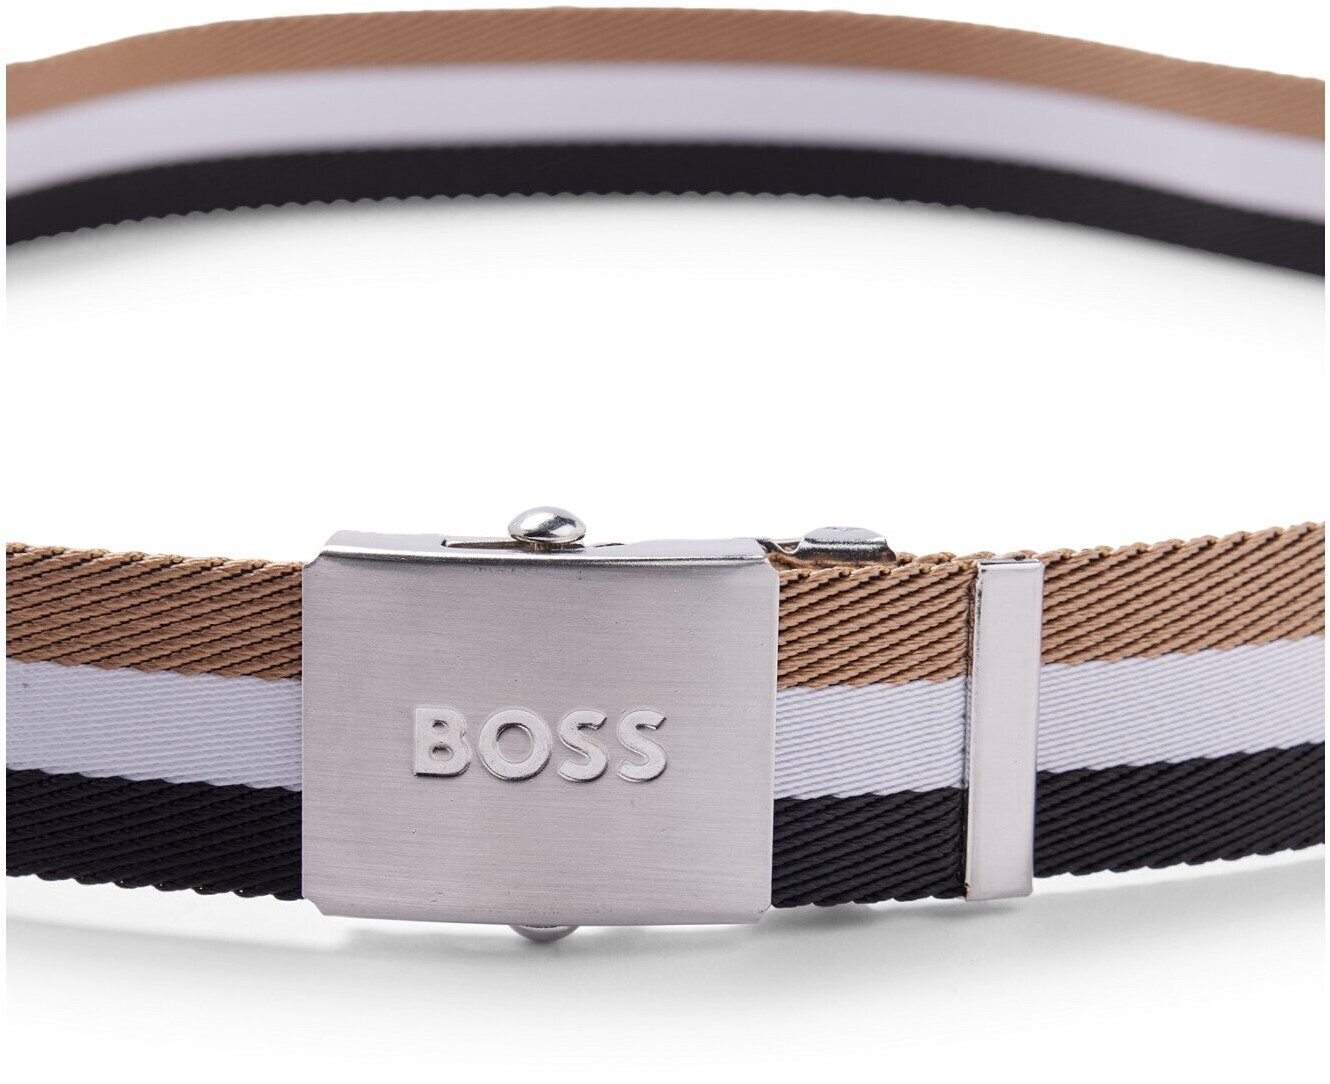 Hugo Boss Boss_Icon-Roll_Sz35 € ab Gemustert bei Preisvergleich (hbeu50481097960) 36,00 